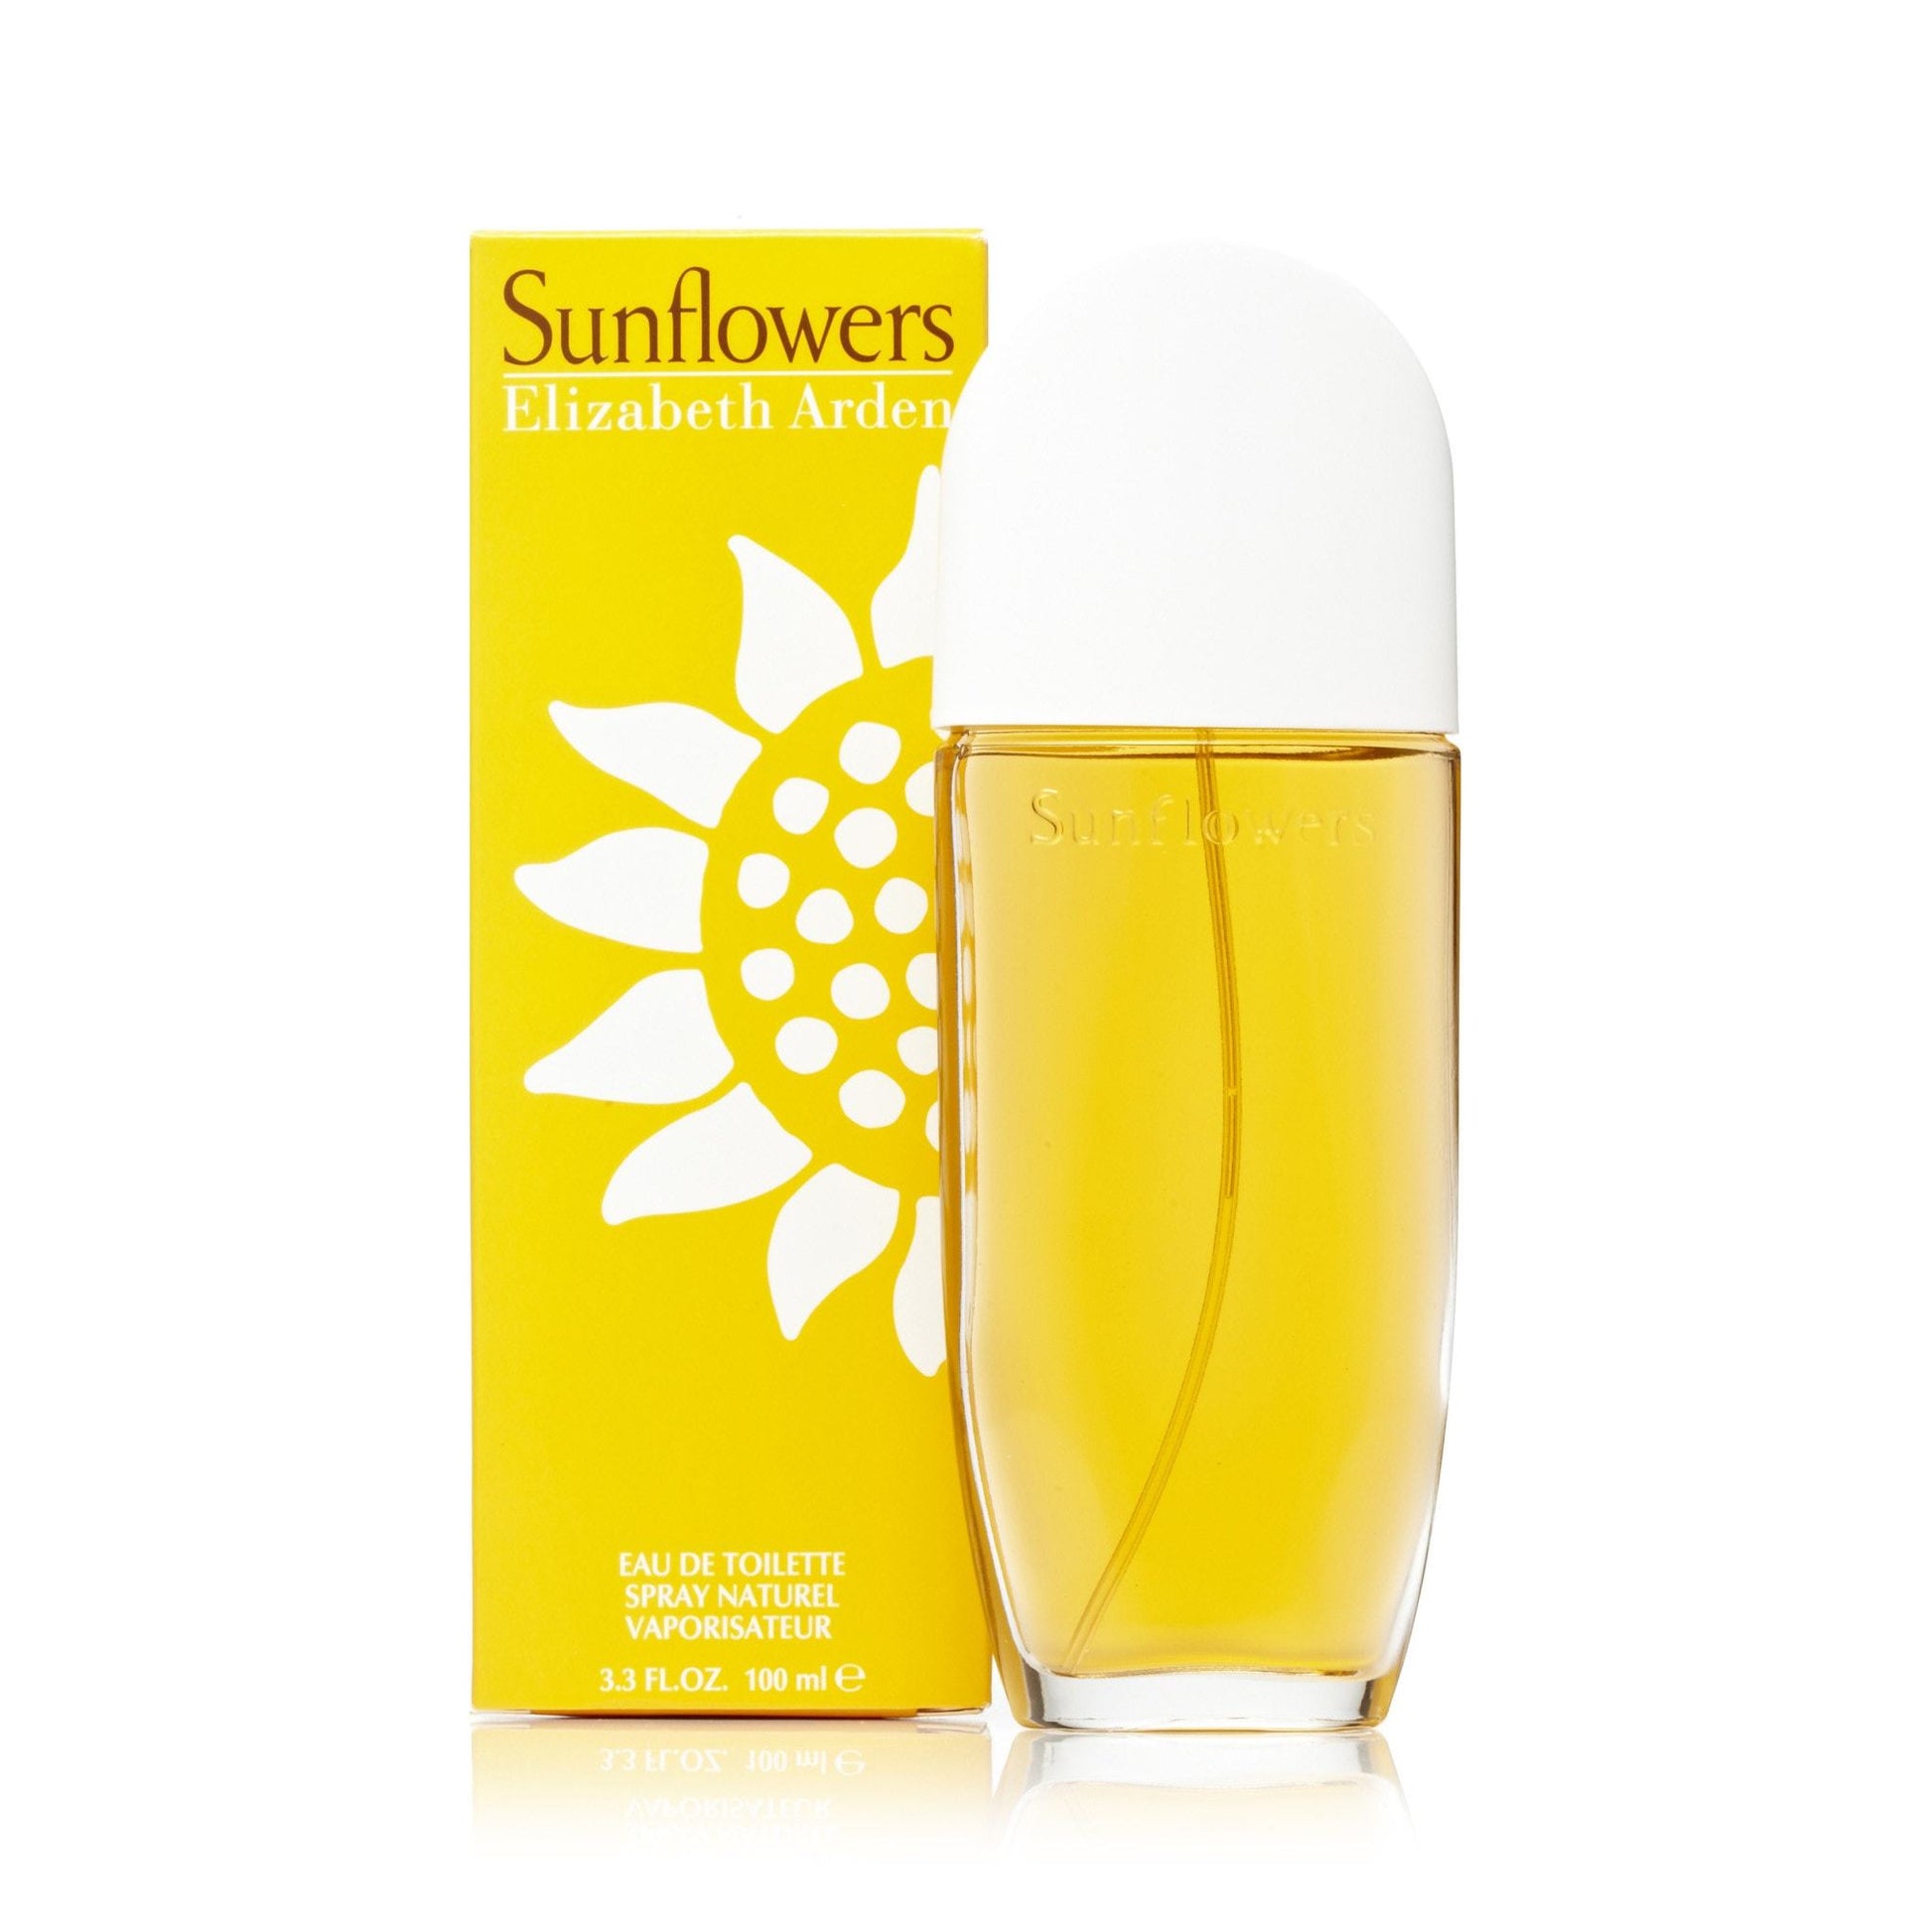 Sunflowers Eau de Toilette Spray for Women by Elizabeth Arden, Product image 1